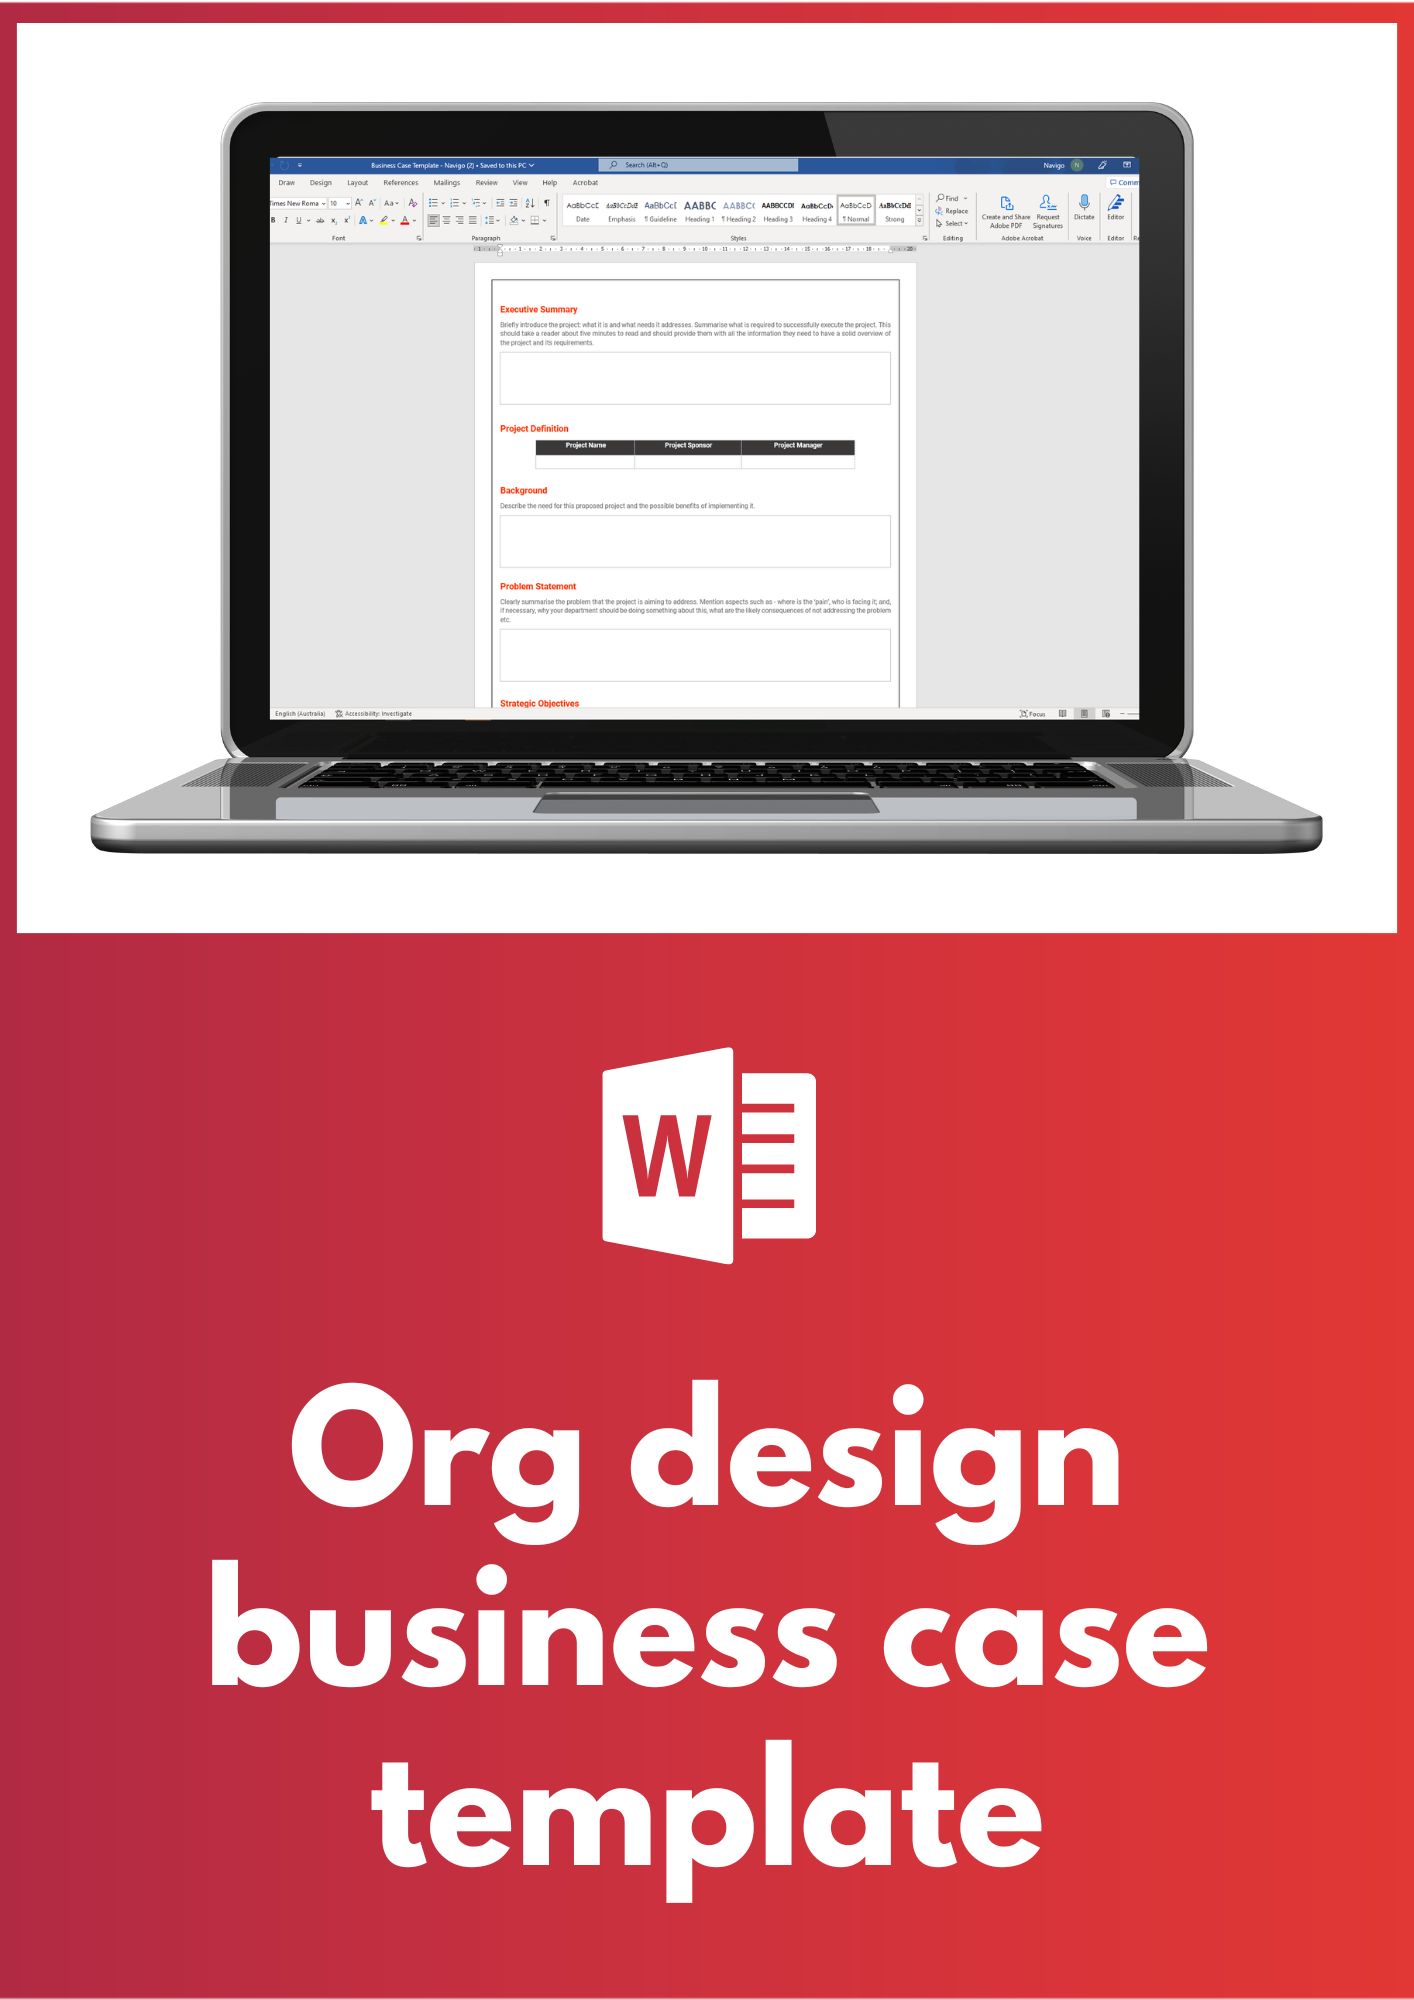 org design business case